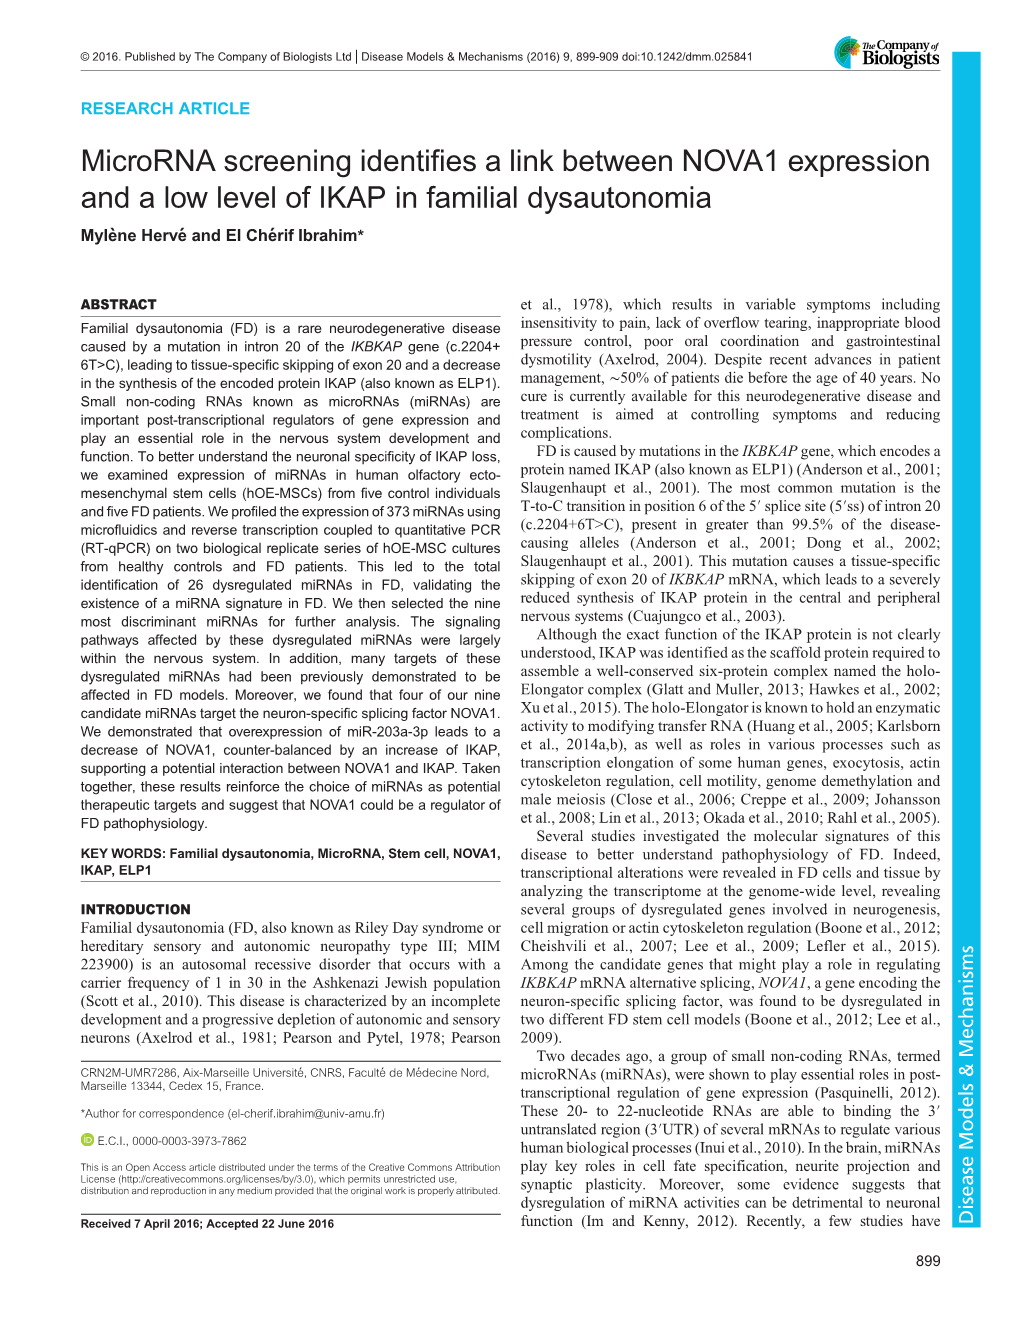 Microrna Screening Identifies a Link Between NOVA1 Expression and a Low Level of IKAP in Familial Dysautonomia Mylenè Hervéand El Chérif Ibrahim*